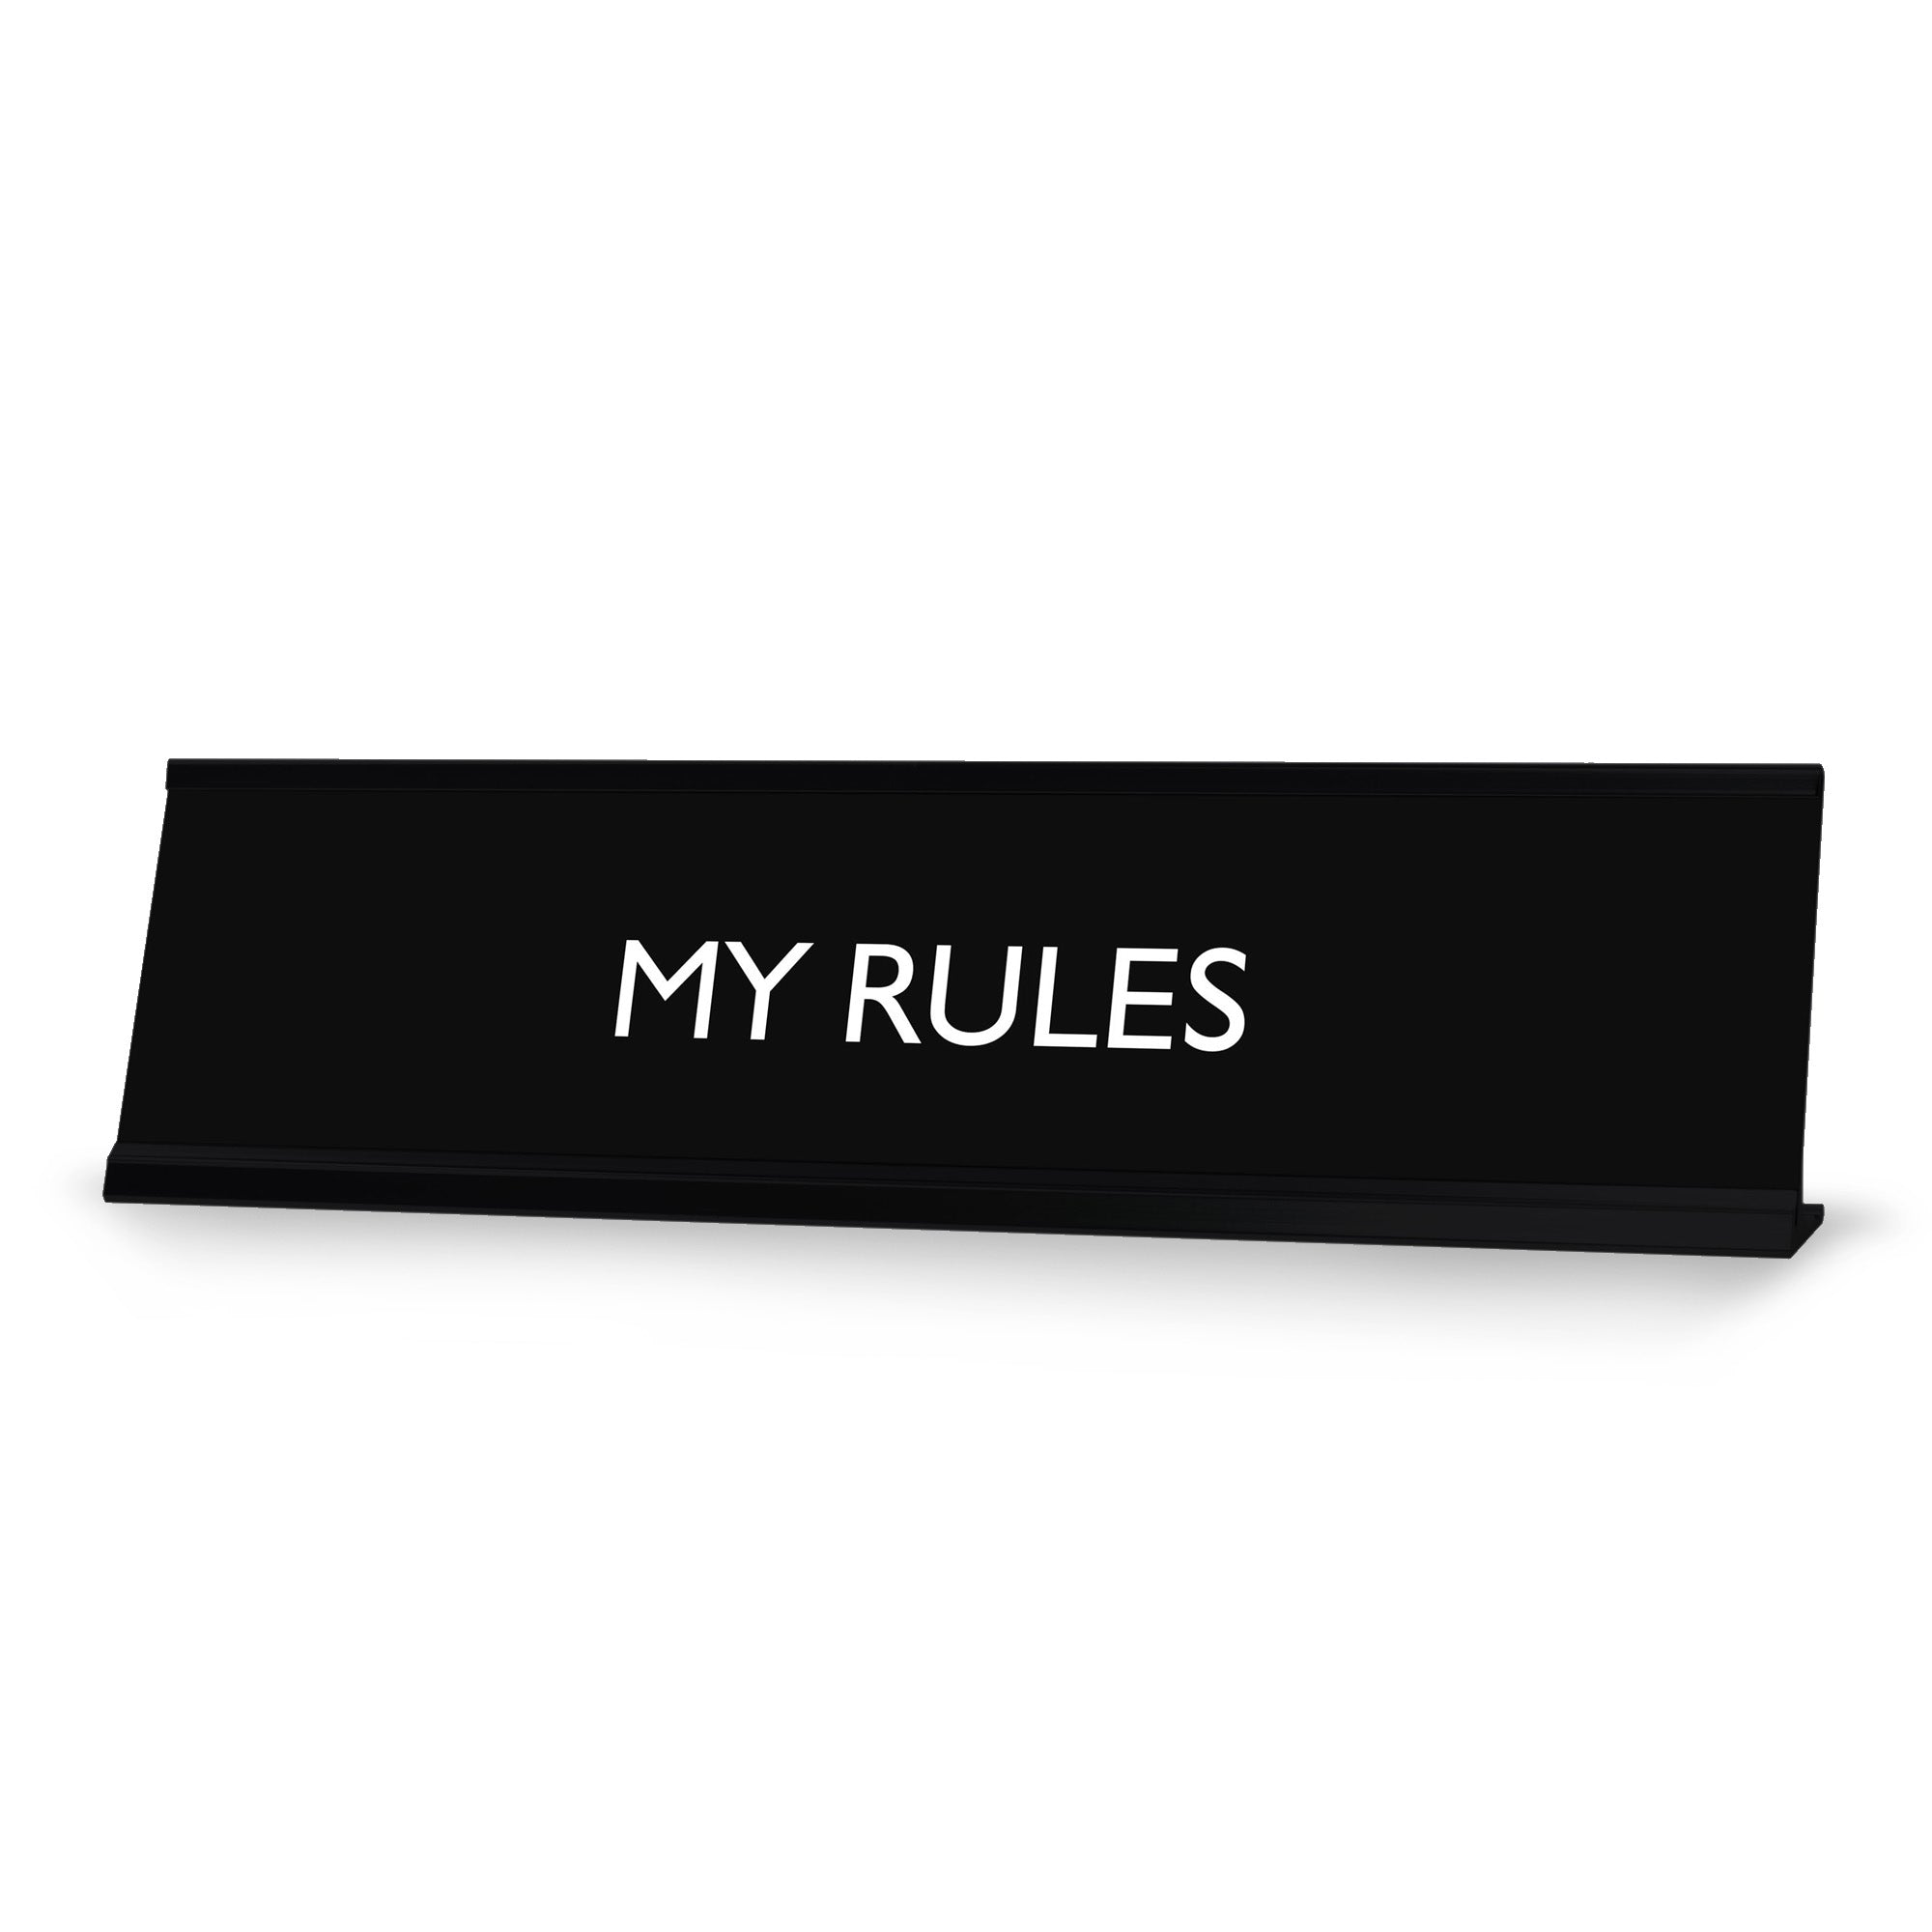 MY RULES Novelty Desk Sign